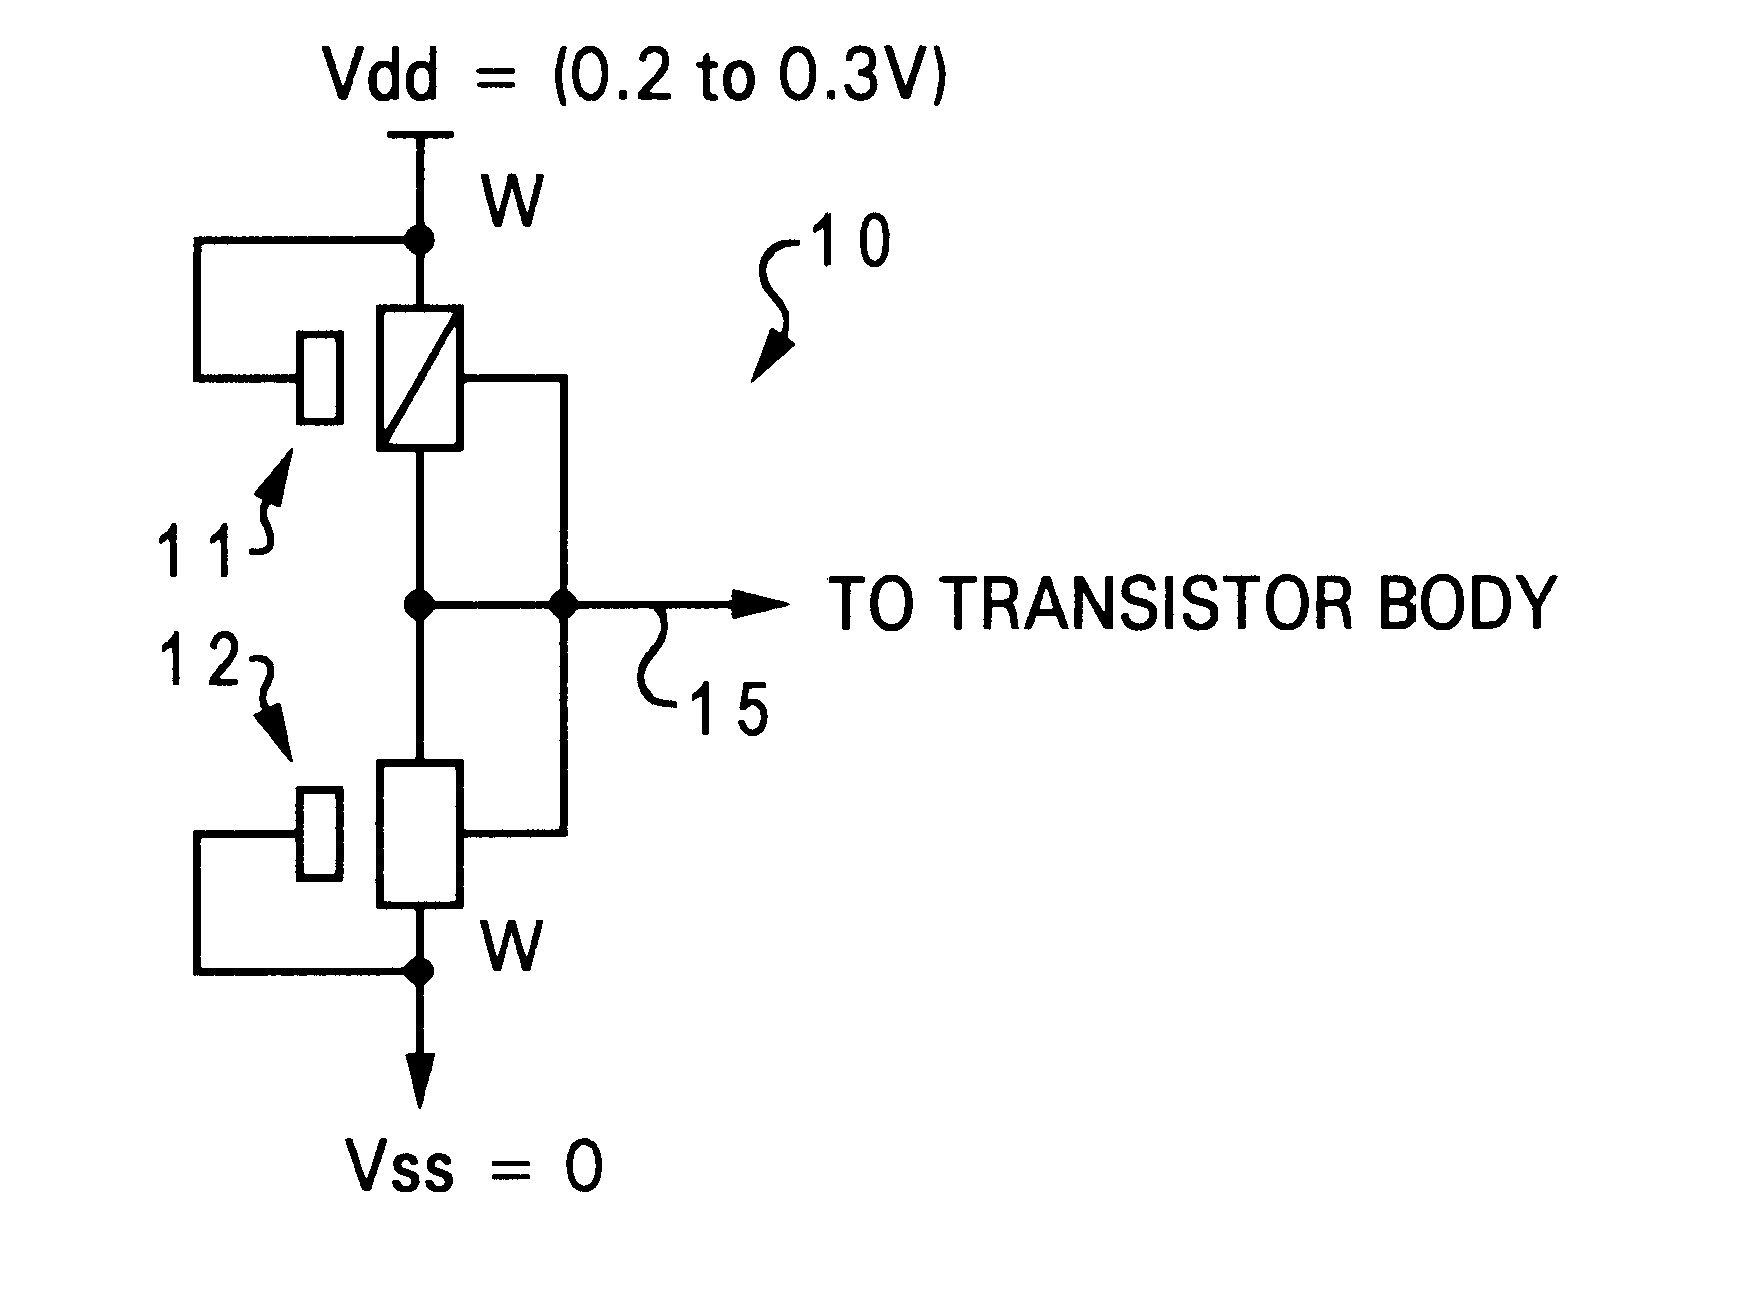 Apparatus for biasing ultra-low voltage logic circuits